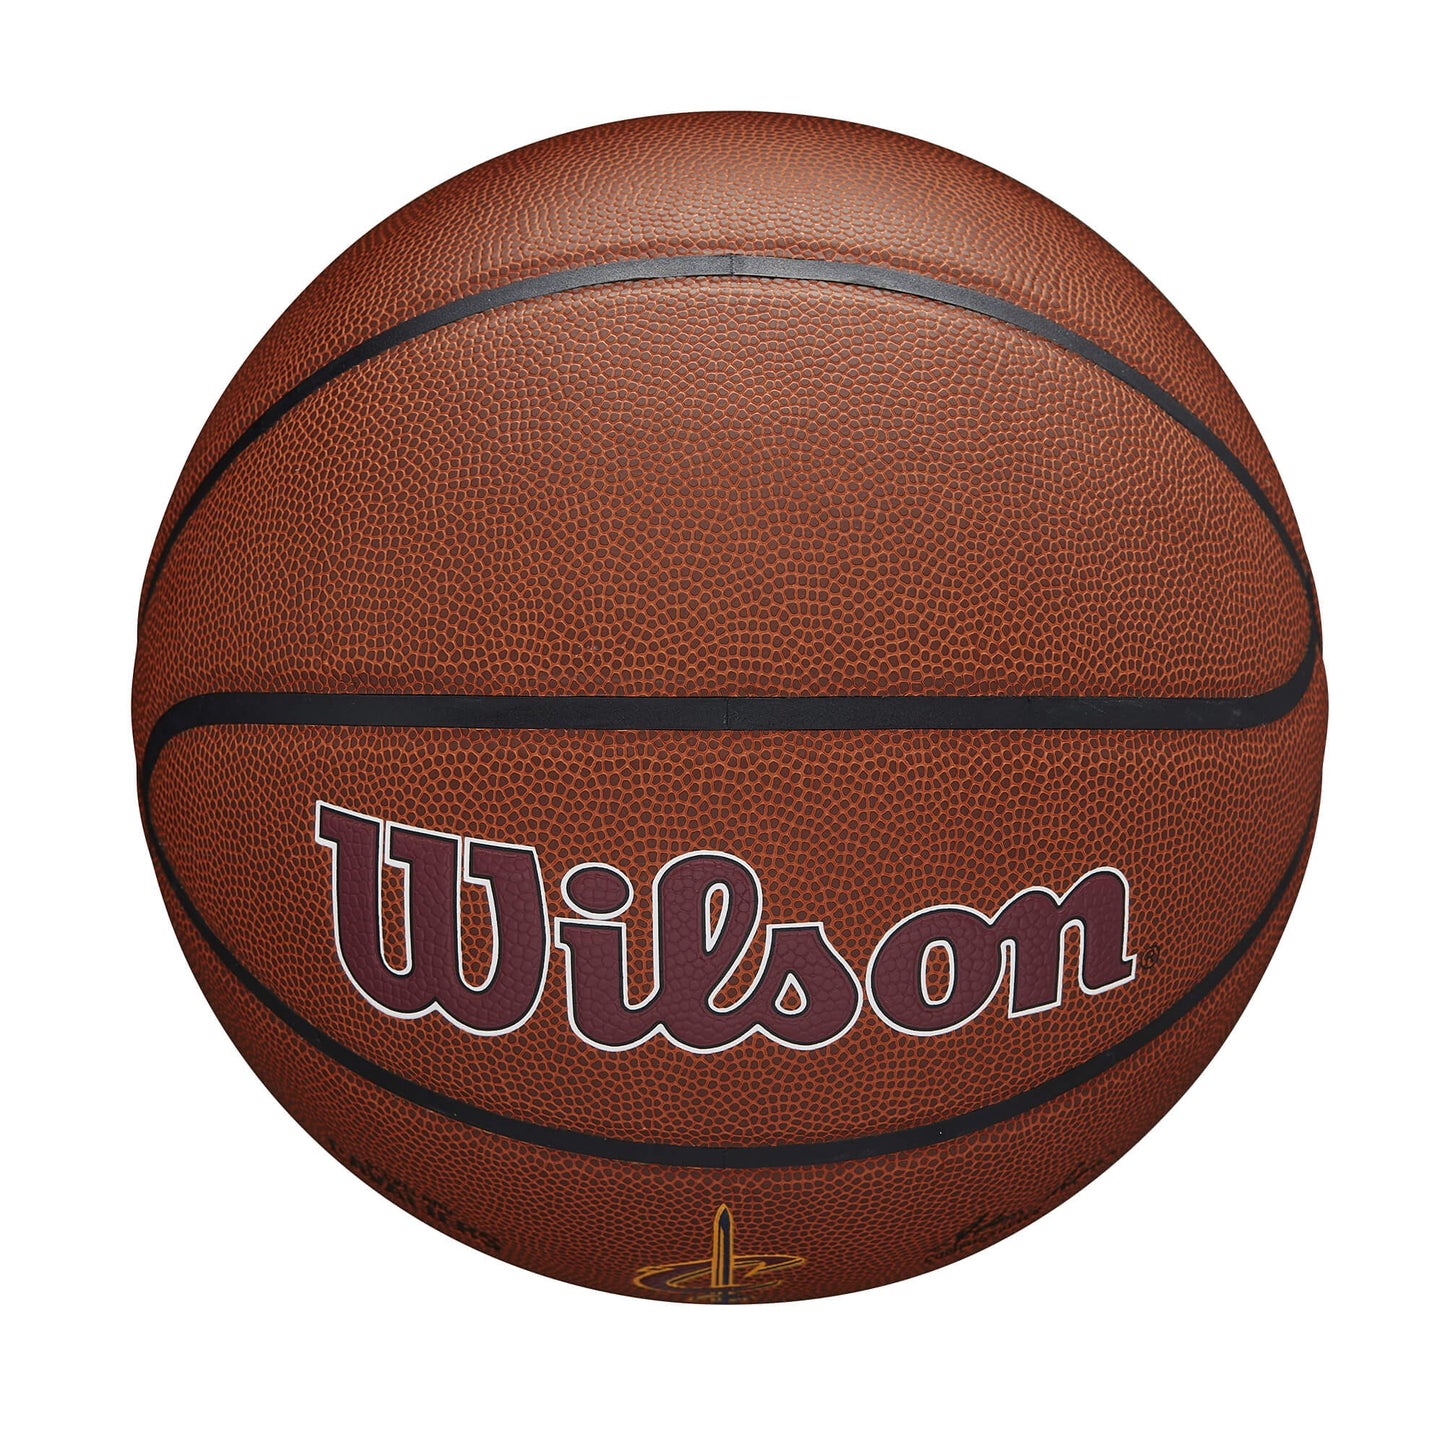 Wilson NBA Team Alliance Composite Basketball Cleveland Cavaliers (sz. 7)